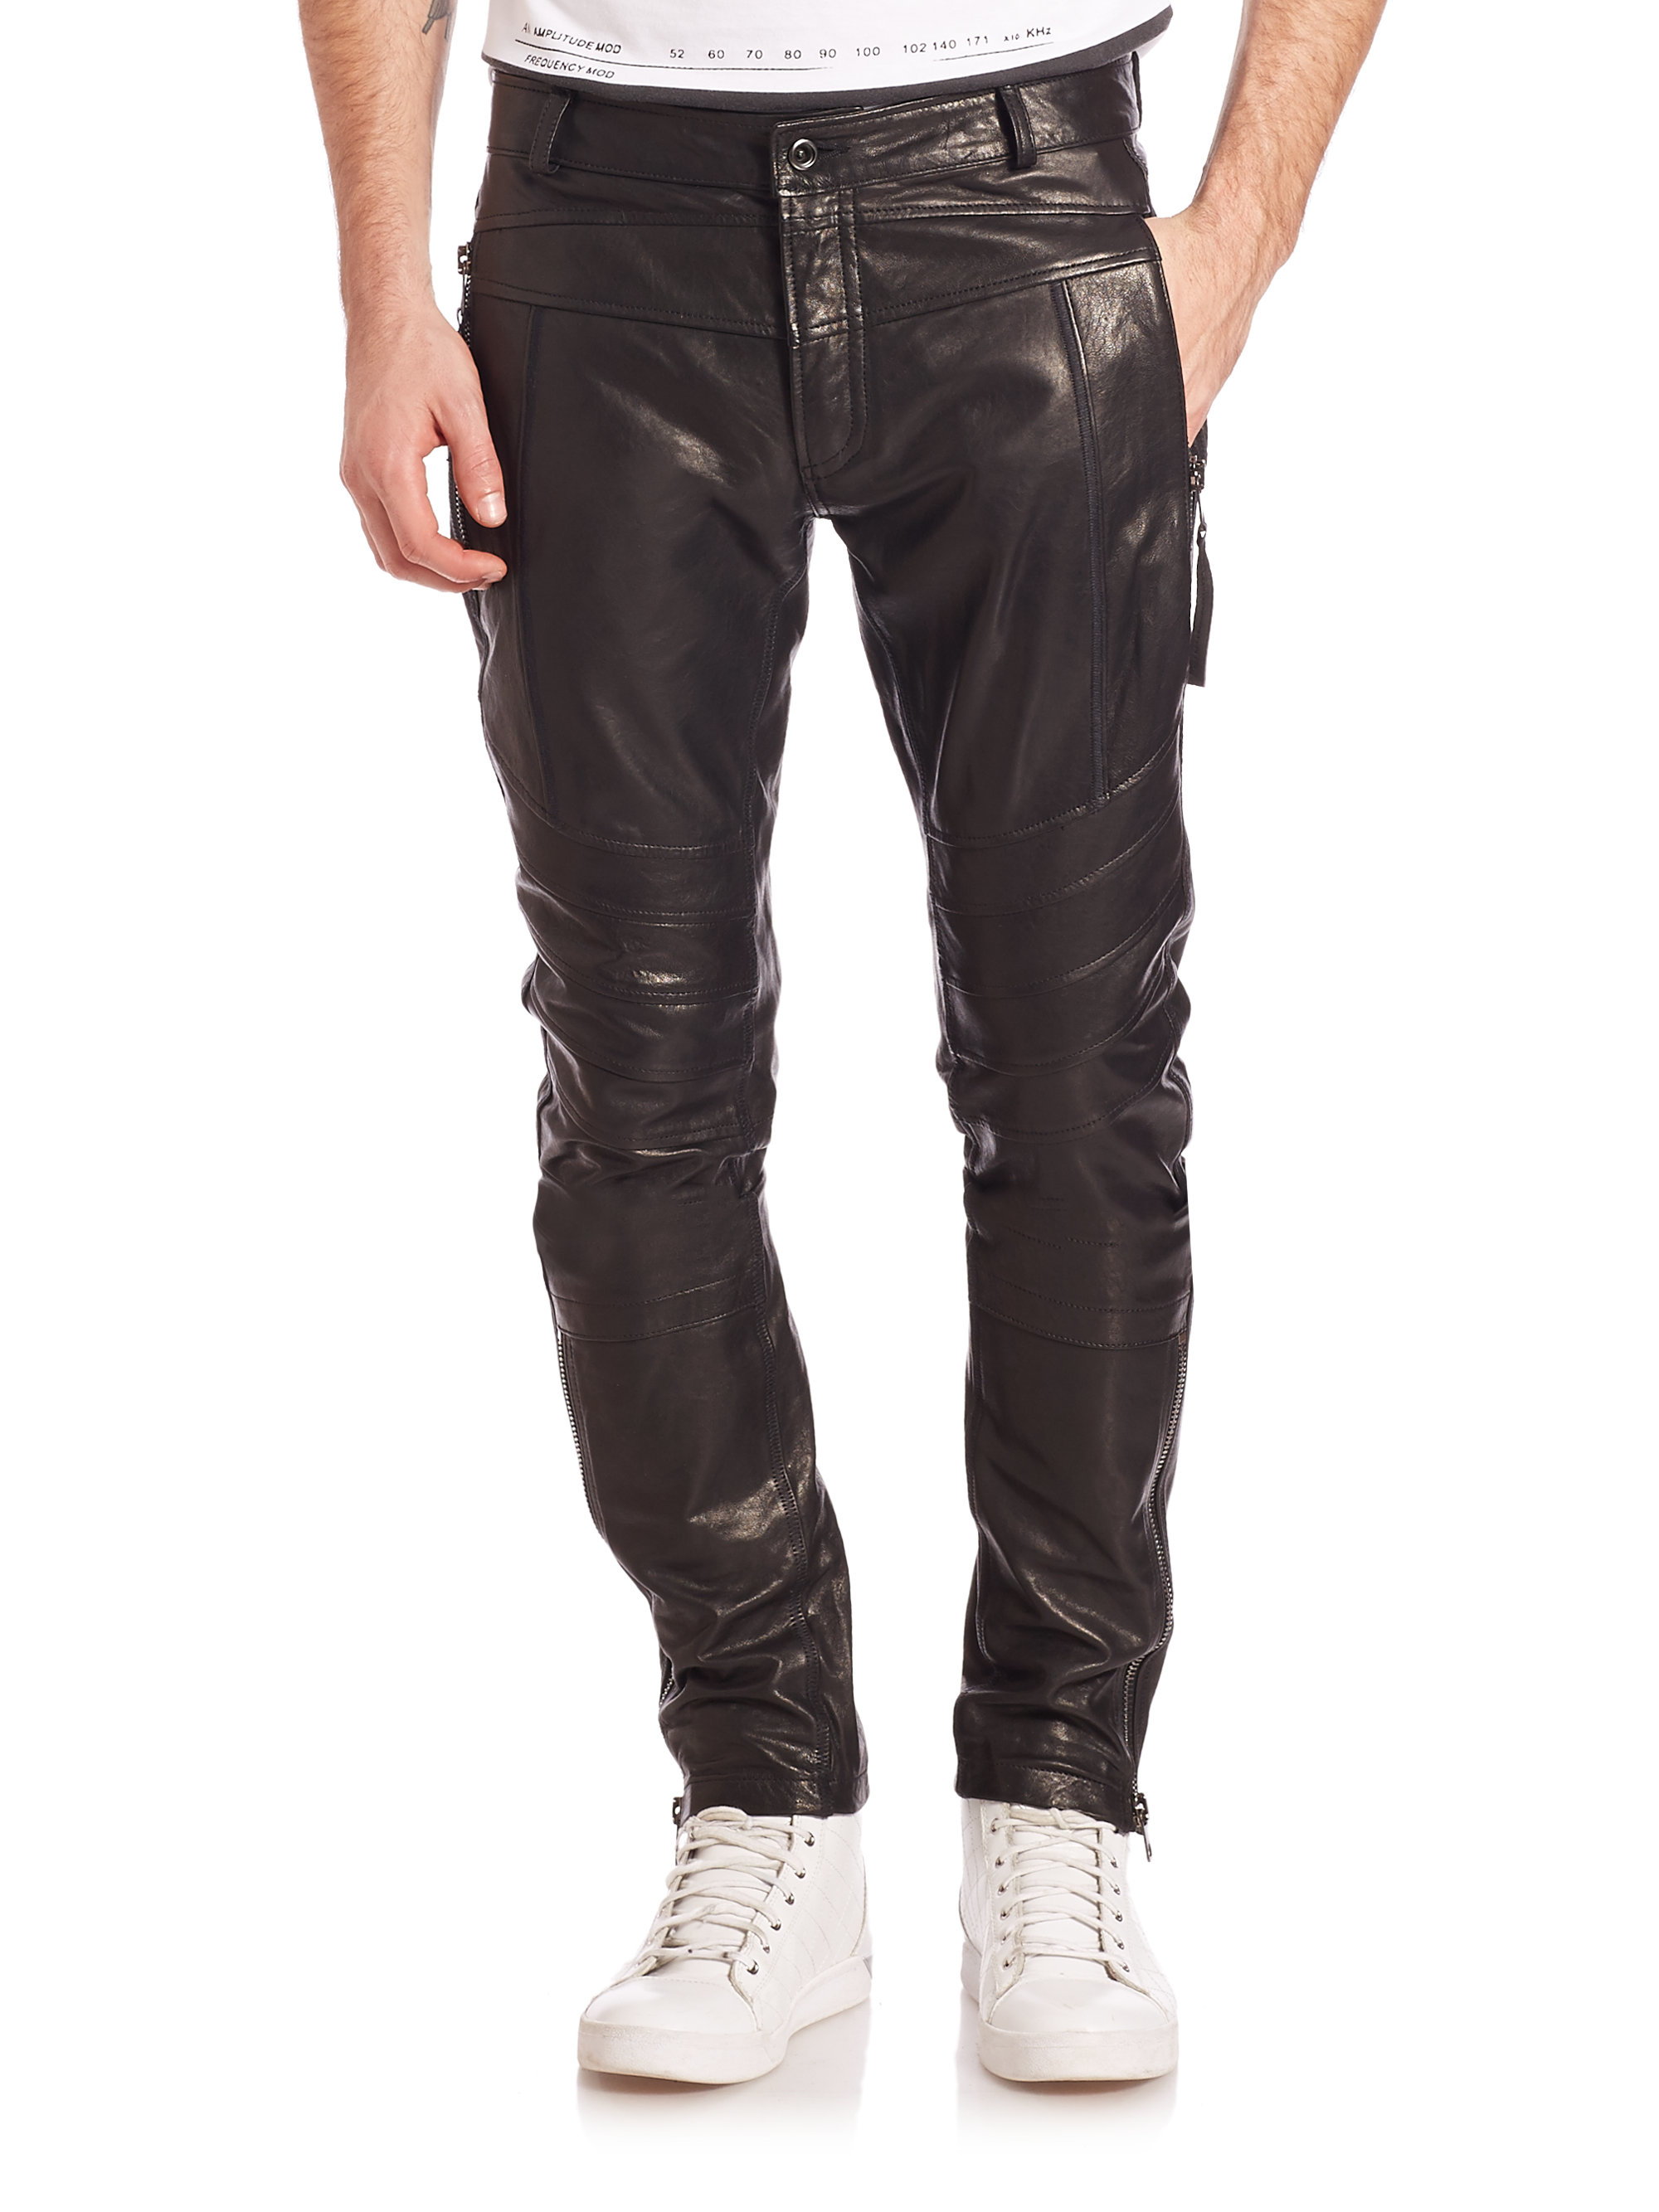 Diesel Black Gold Leather Moto Pants in Black for Men - Lyst